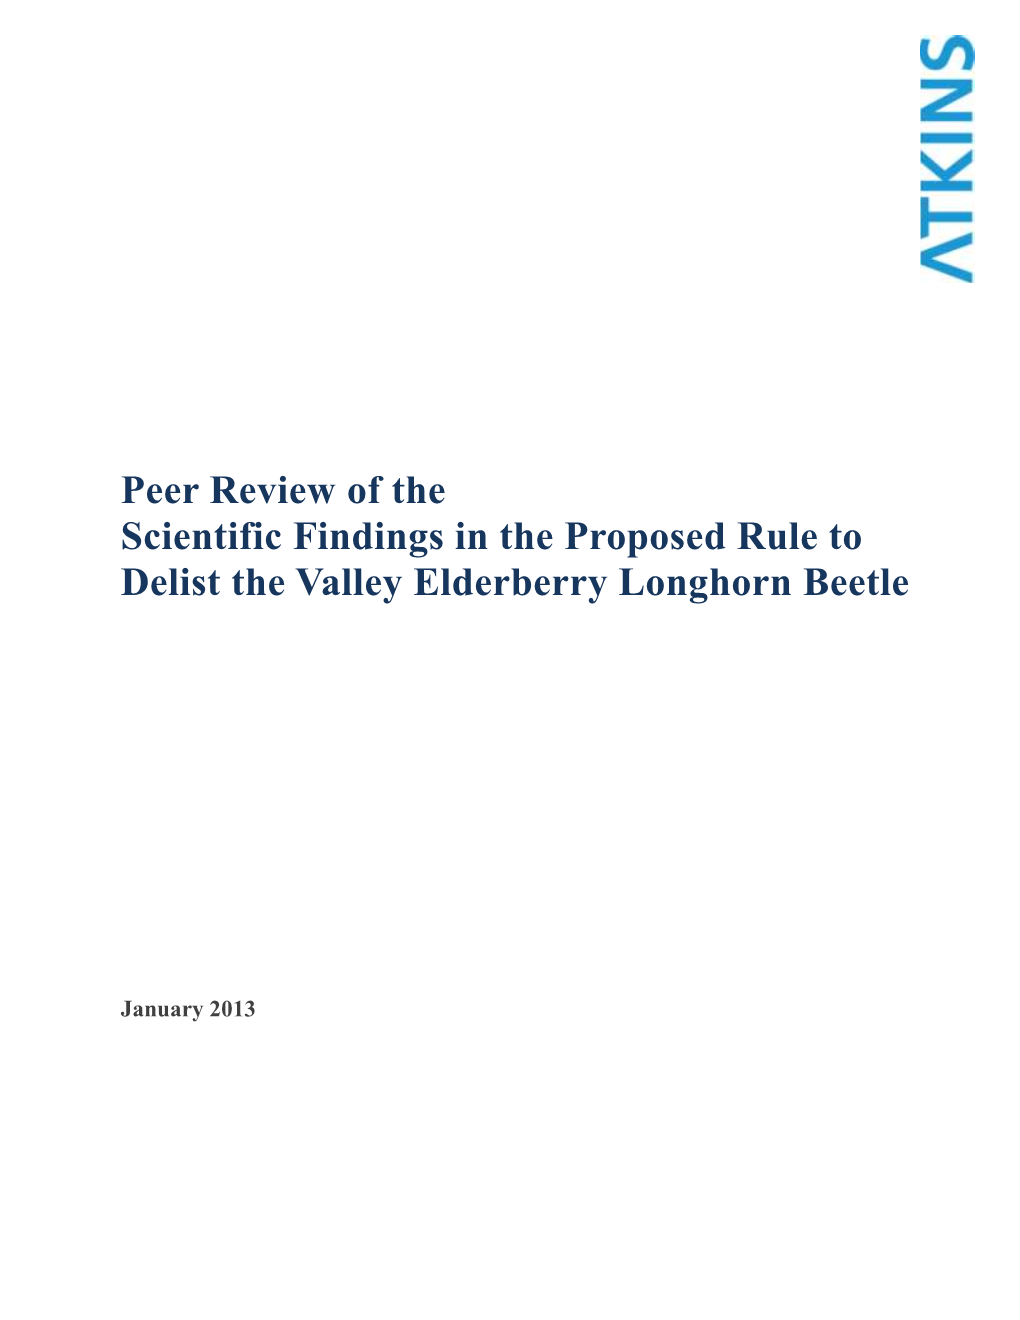 Peer Review of the Scientific Findings in the Proposed Rule to Delist the Valley Elderberry Longhorn Beetle